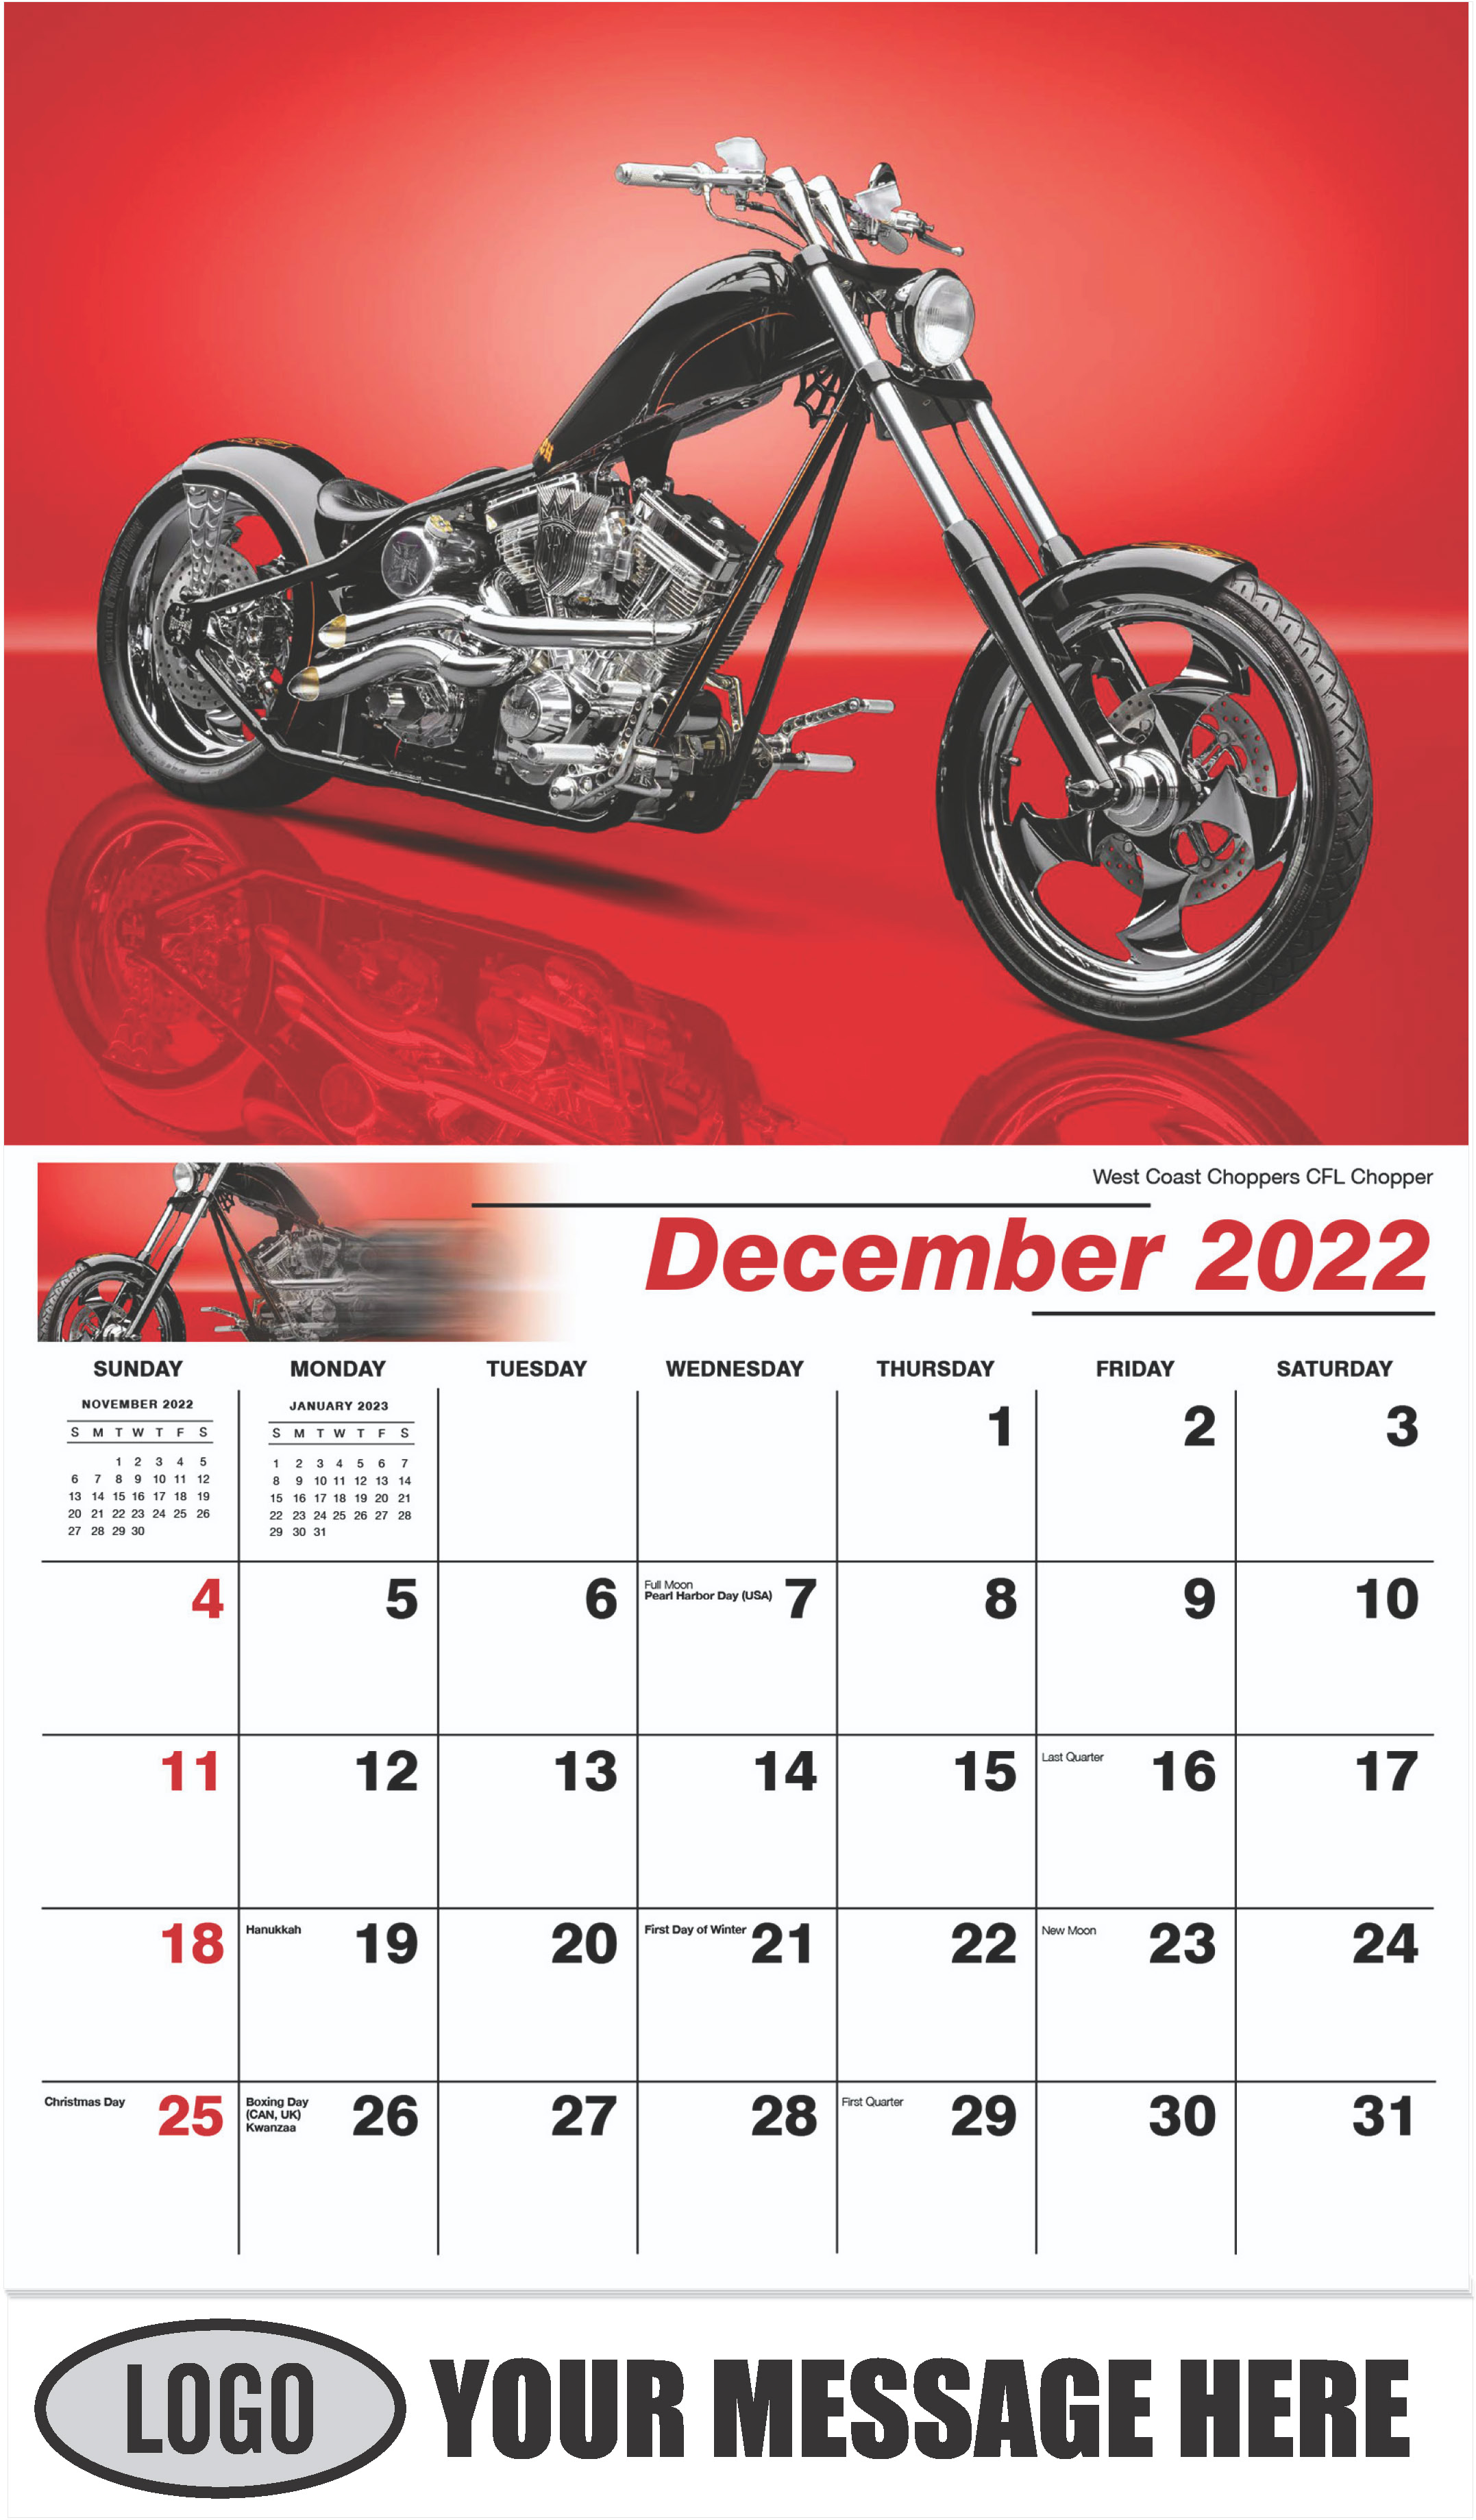 West Coast Choppers CFL Chopper - December 2022 - Motorcycle Mania 2023 Promotional Calendar